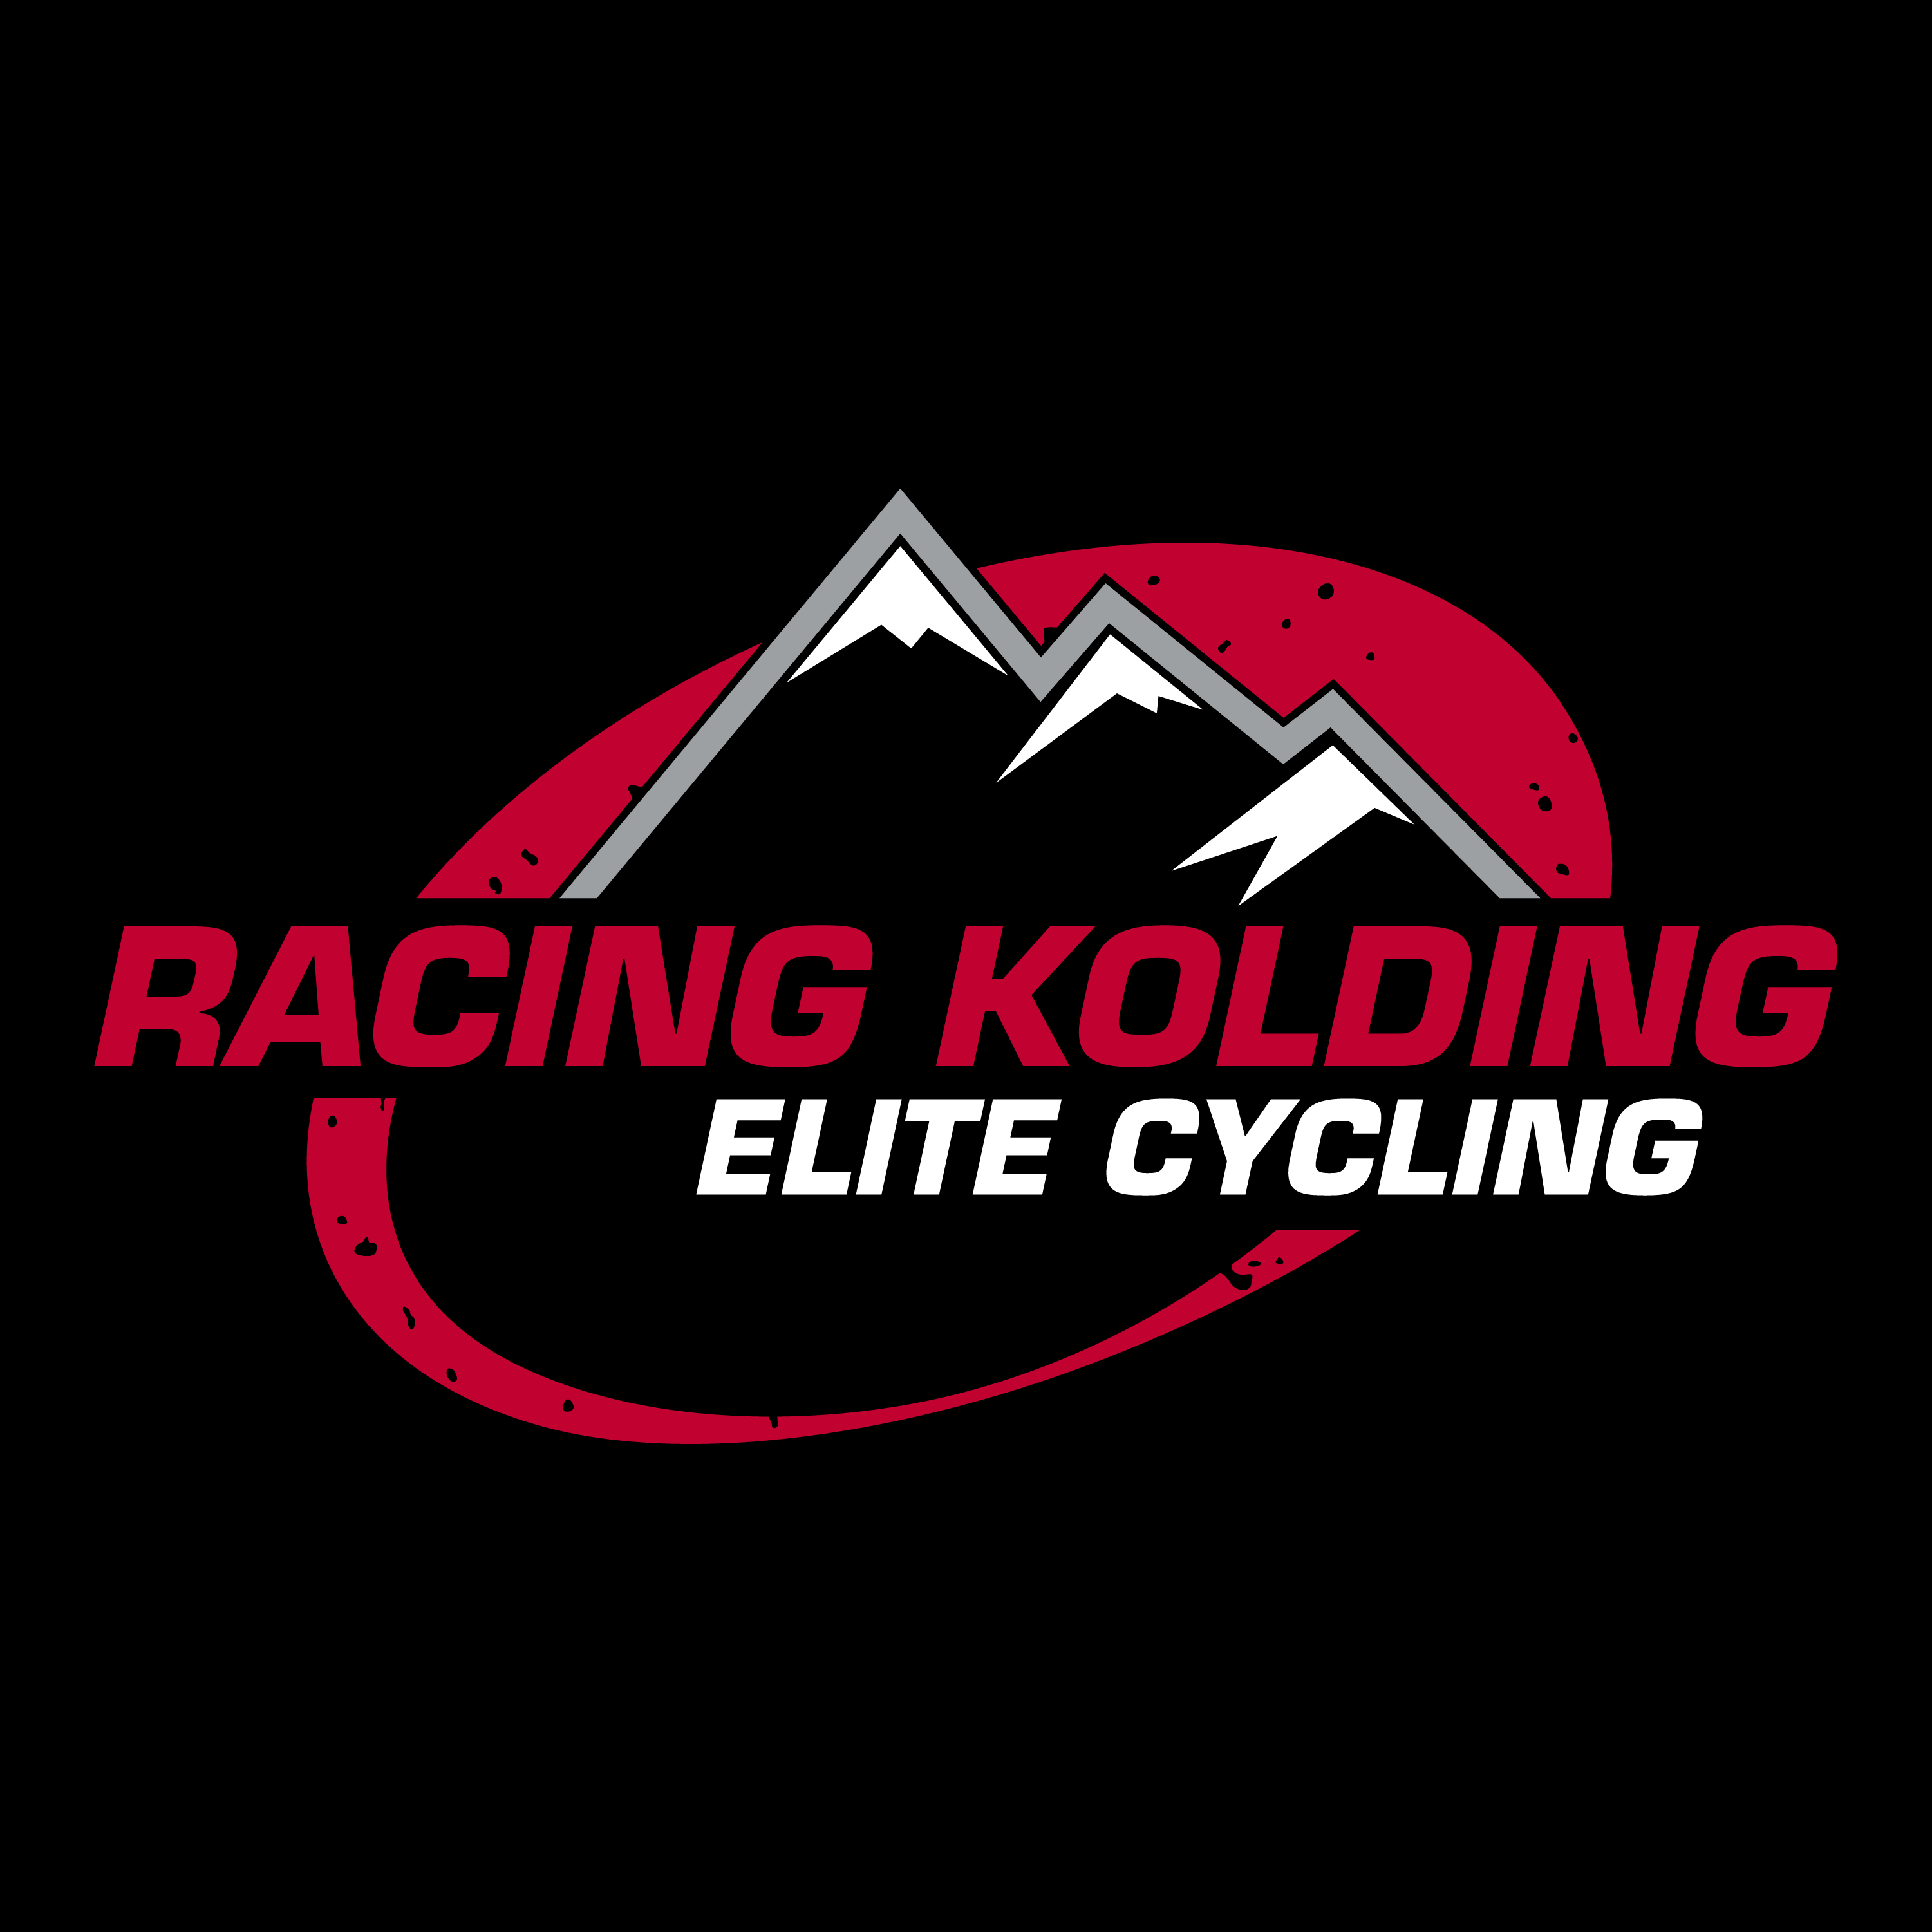 Club Image for RACING KOLDING ELITE CYCLING